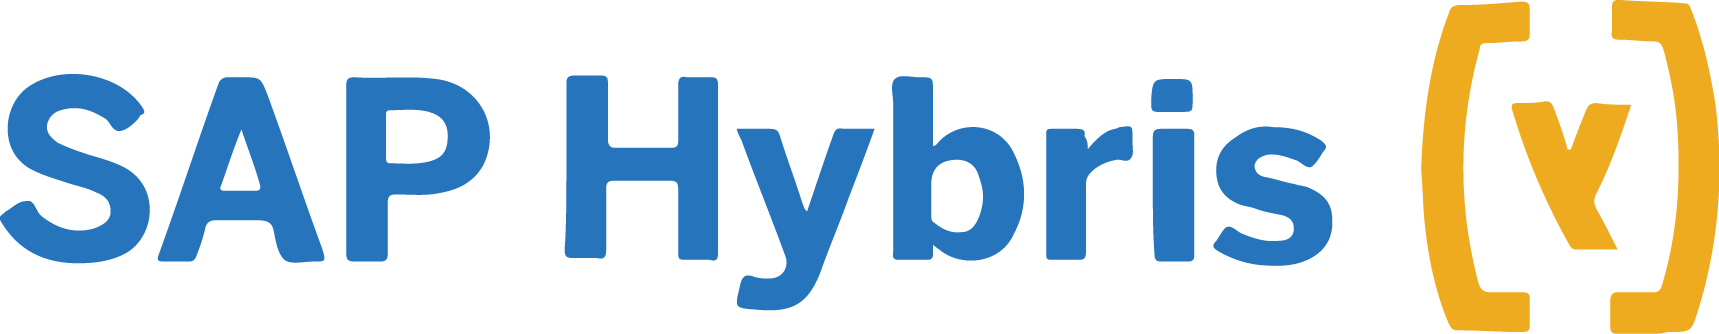 SAP Hybris Logo